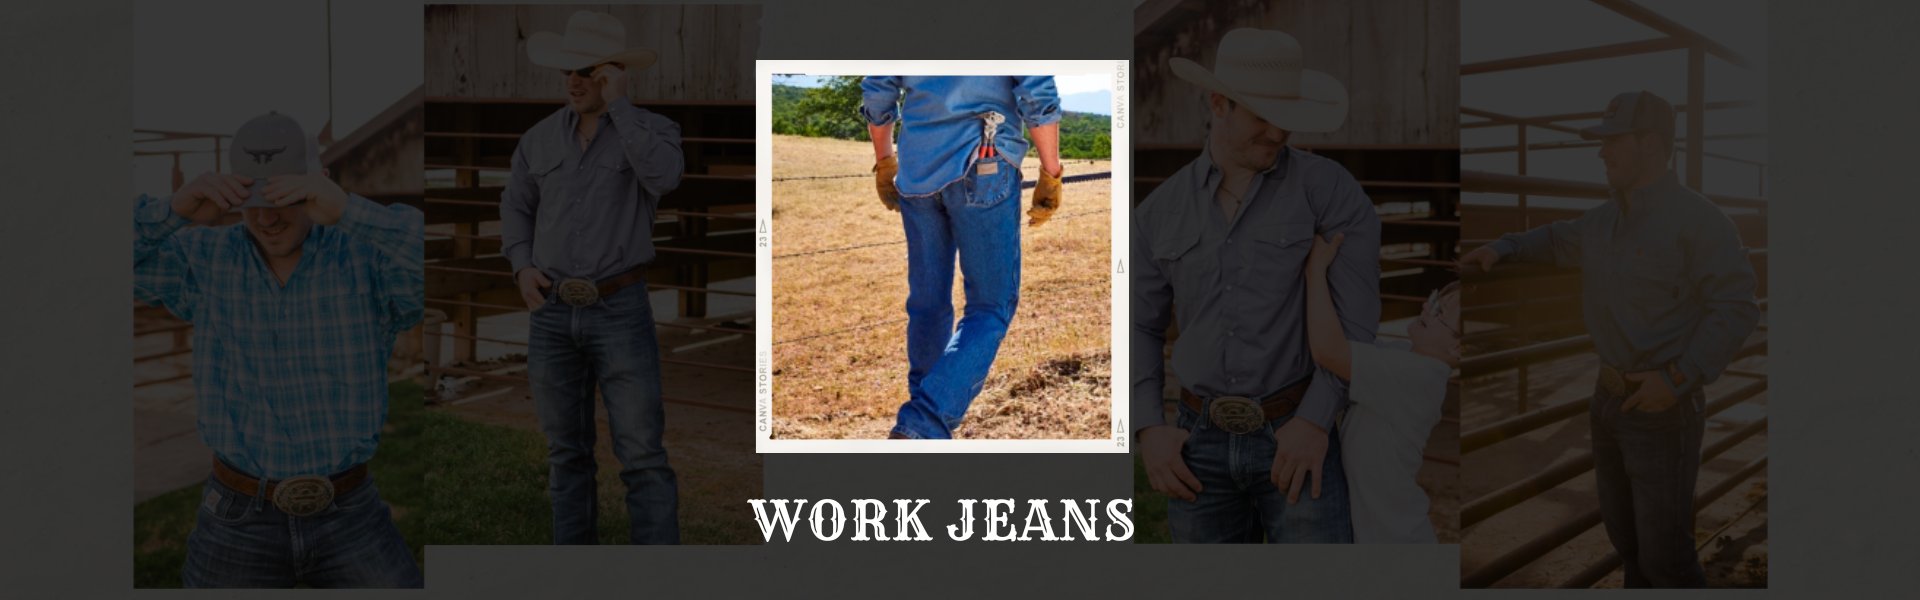 Work Jeans